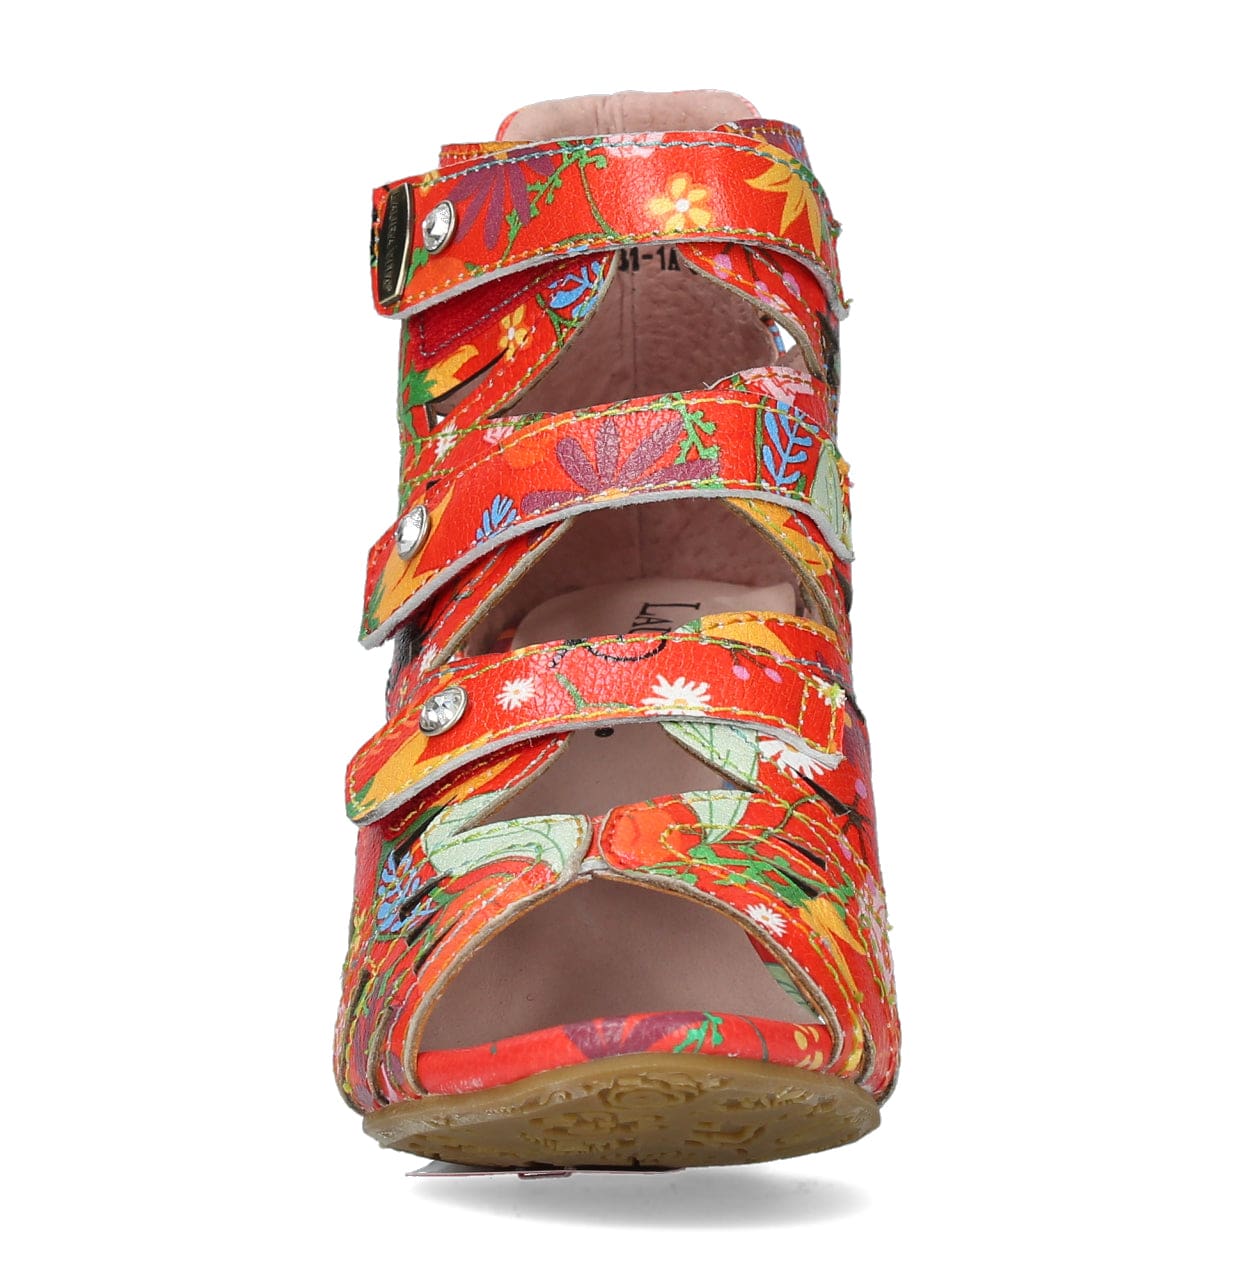 Schoenen JACBO 01 Bloem - Sandaal